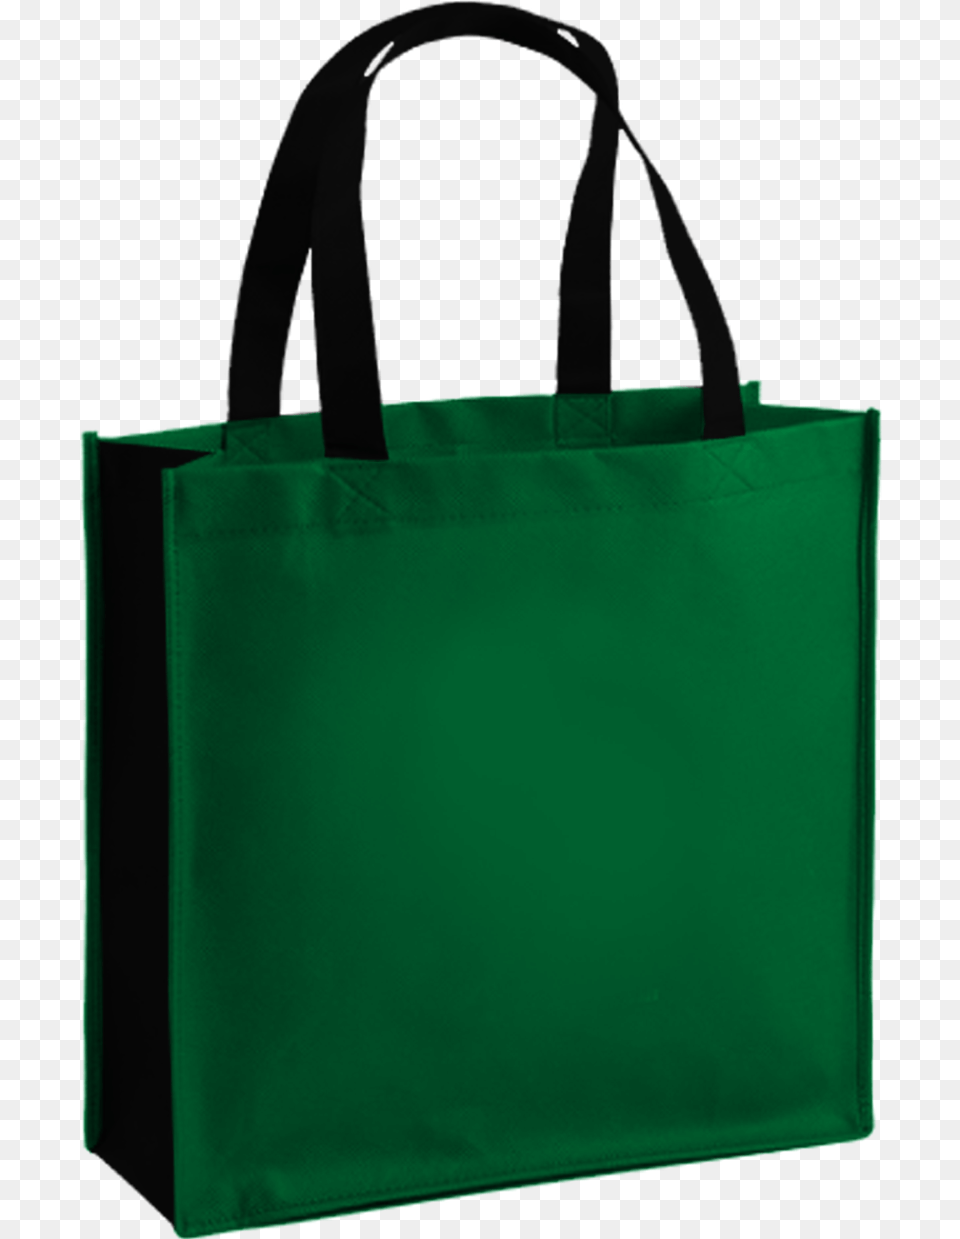 Reusable Tornado Bags Reusable Tote Bag Black, Accessories, Handbag, Tote Bag, Shopping Bag Png Image